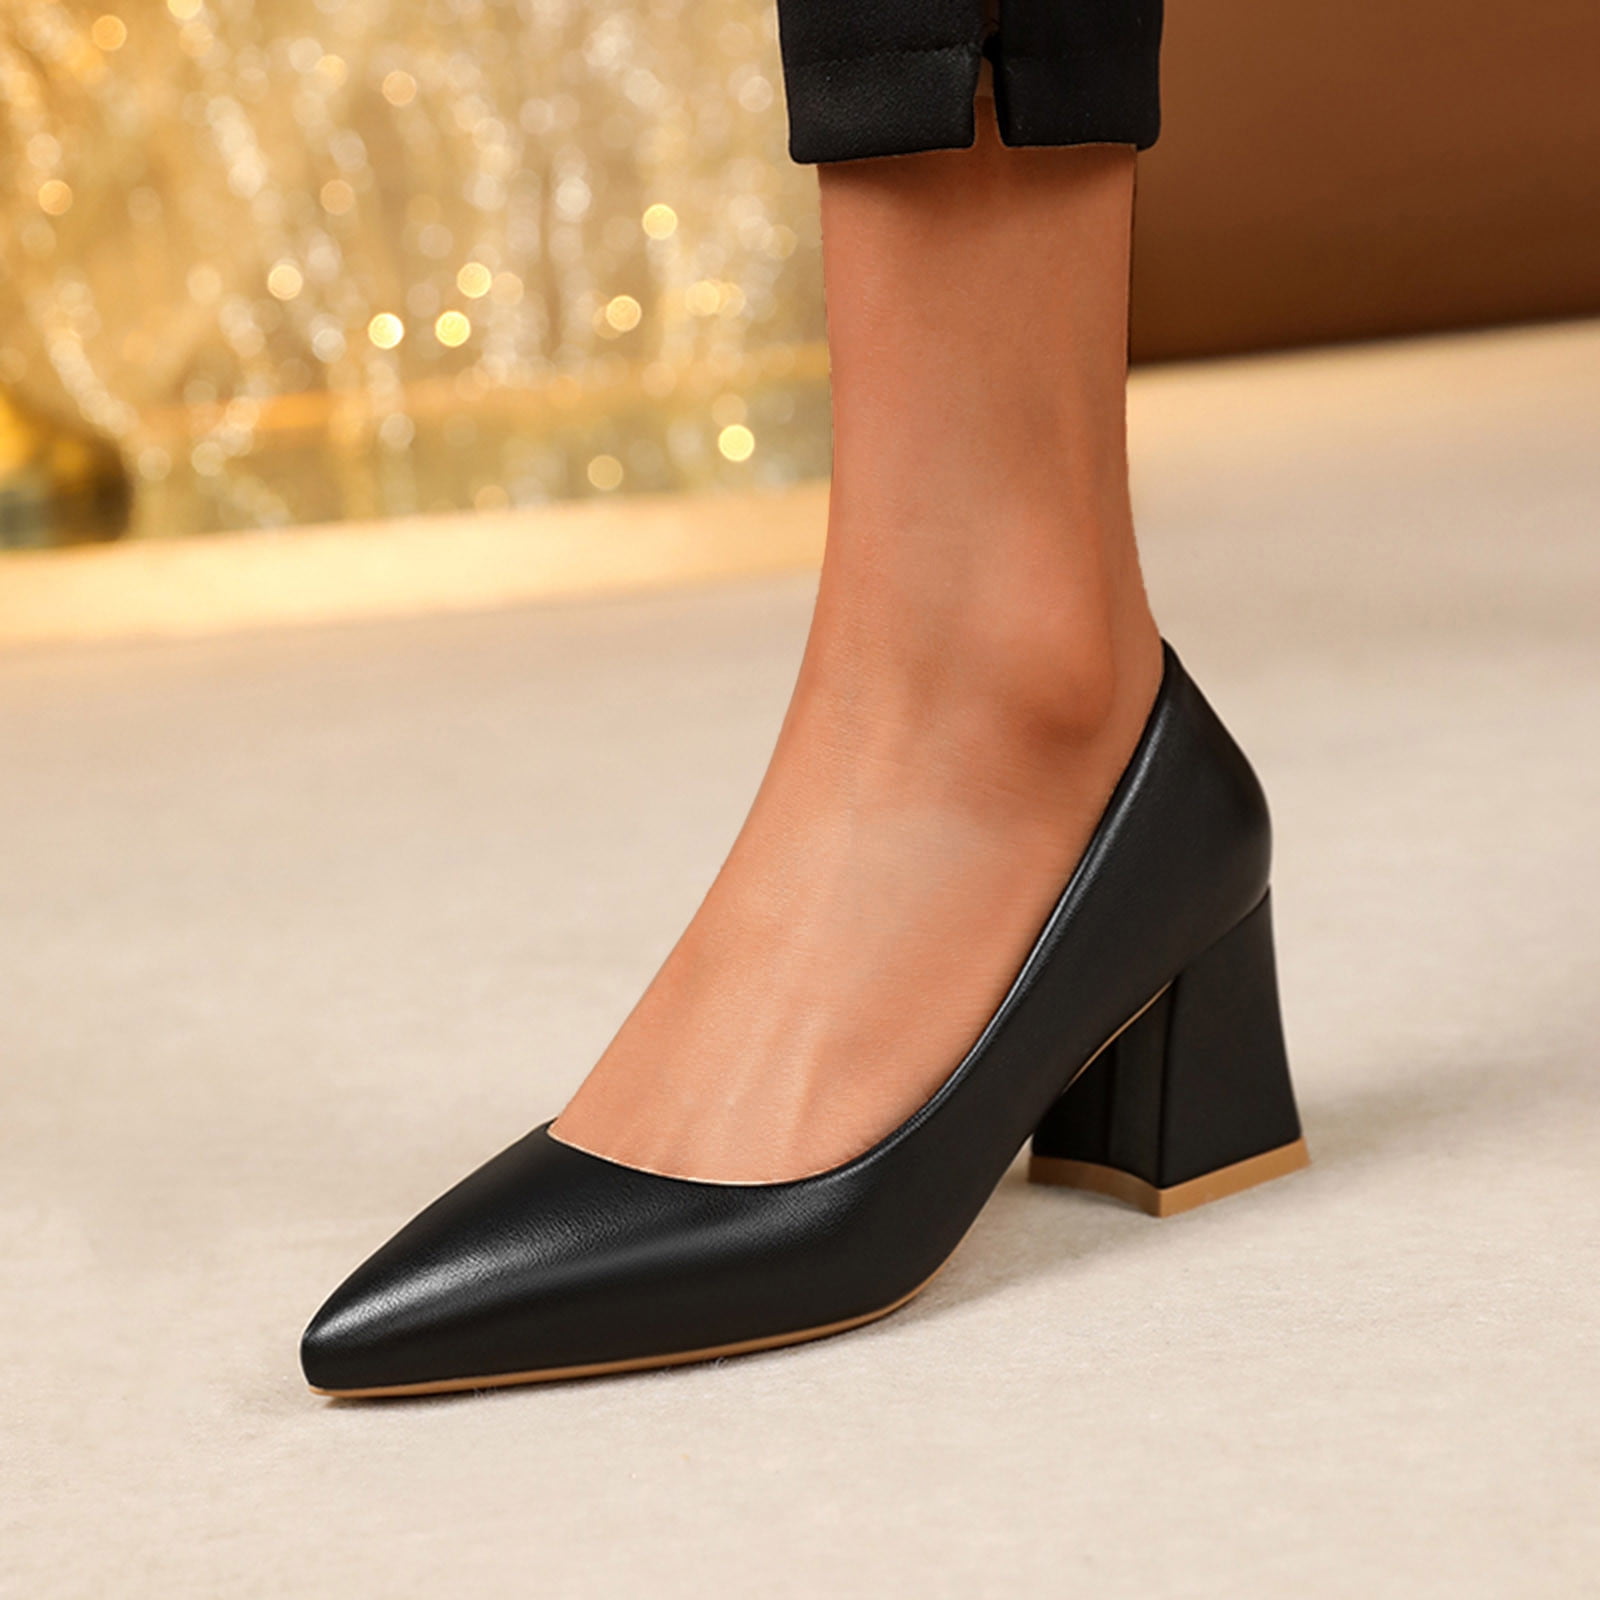 Badgley Mischka evening high heels open toe shoes Black/gold trim US 6,5  NEW | eBay